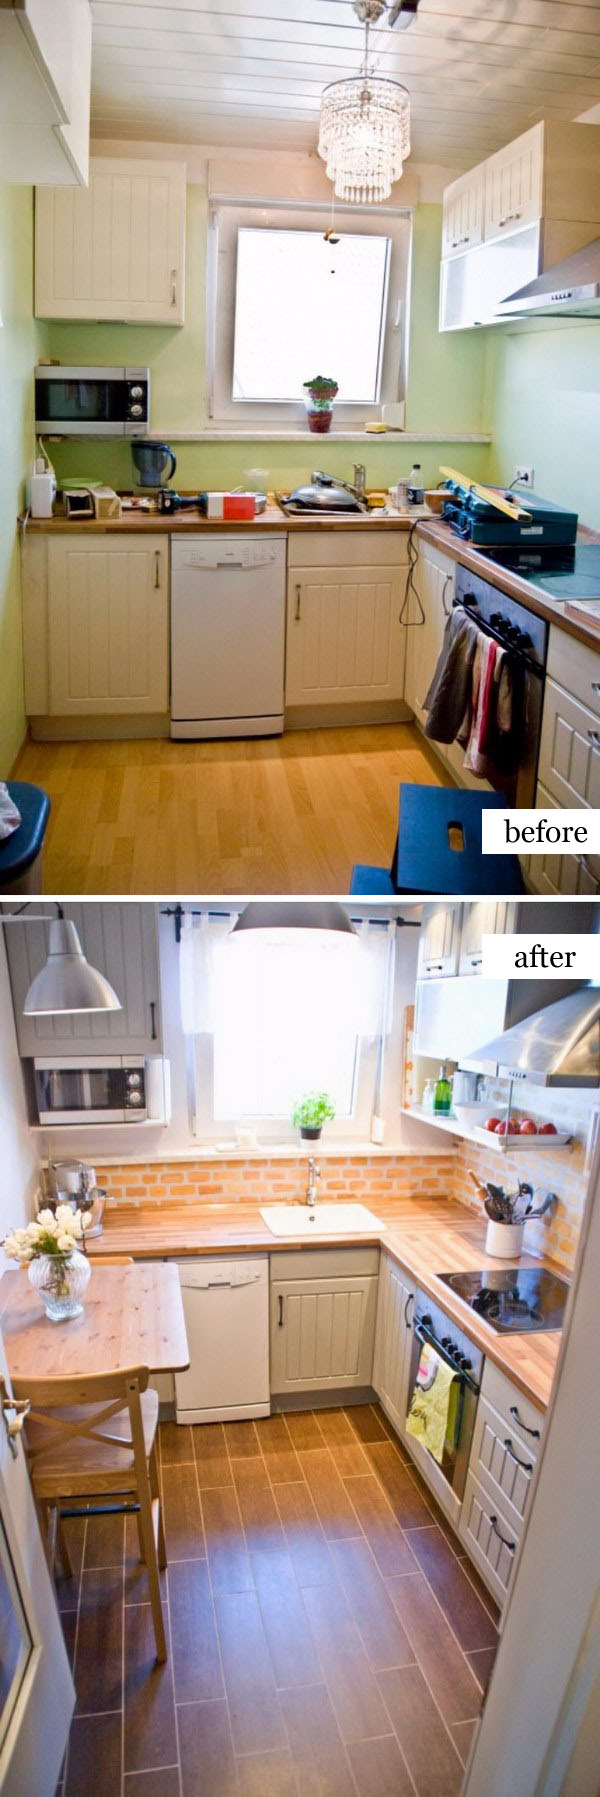 Tiny Kitchen Renovation with Faux Painted Brick Backsplash and Wood Tile Floors. 